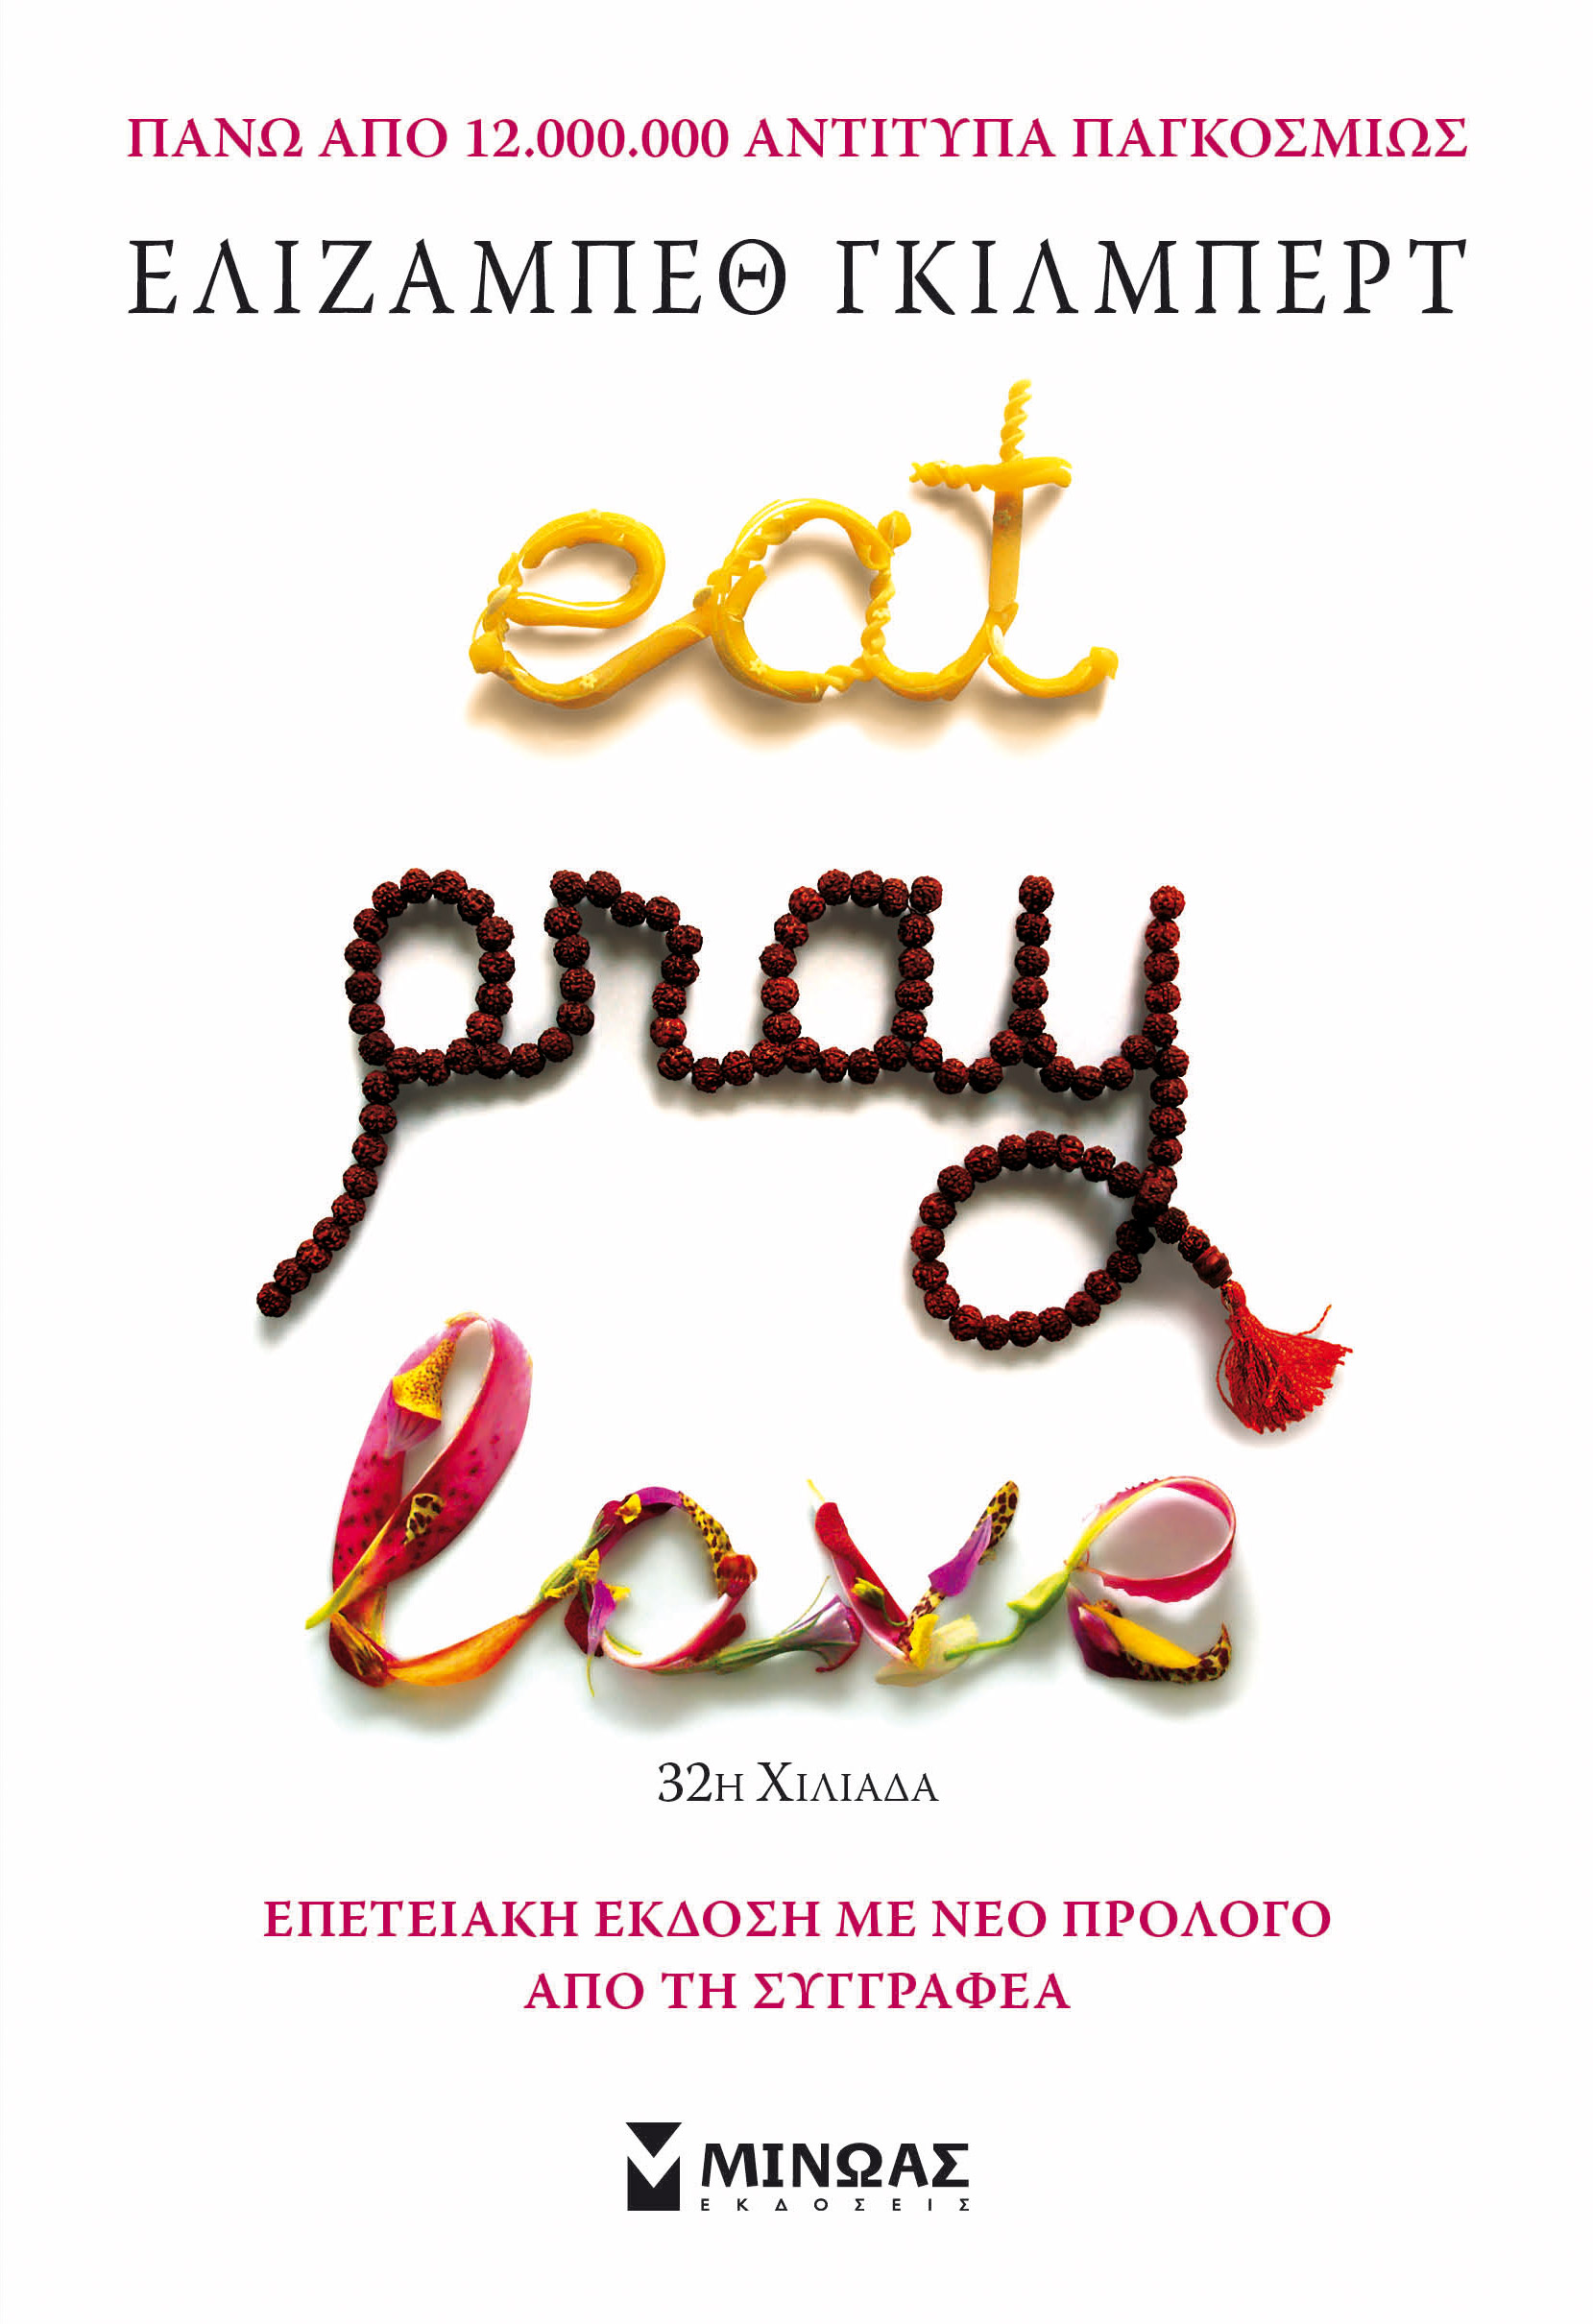 «Eat pray love», Ελίζαμπεθ Γκίλμπερτ